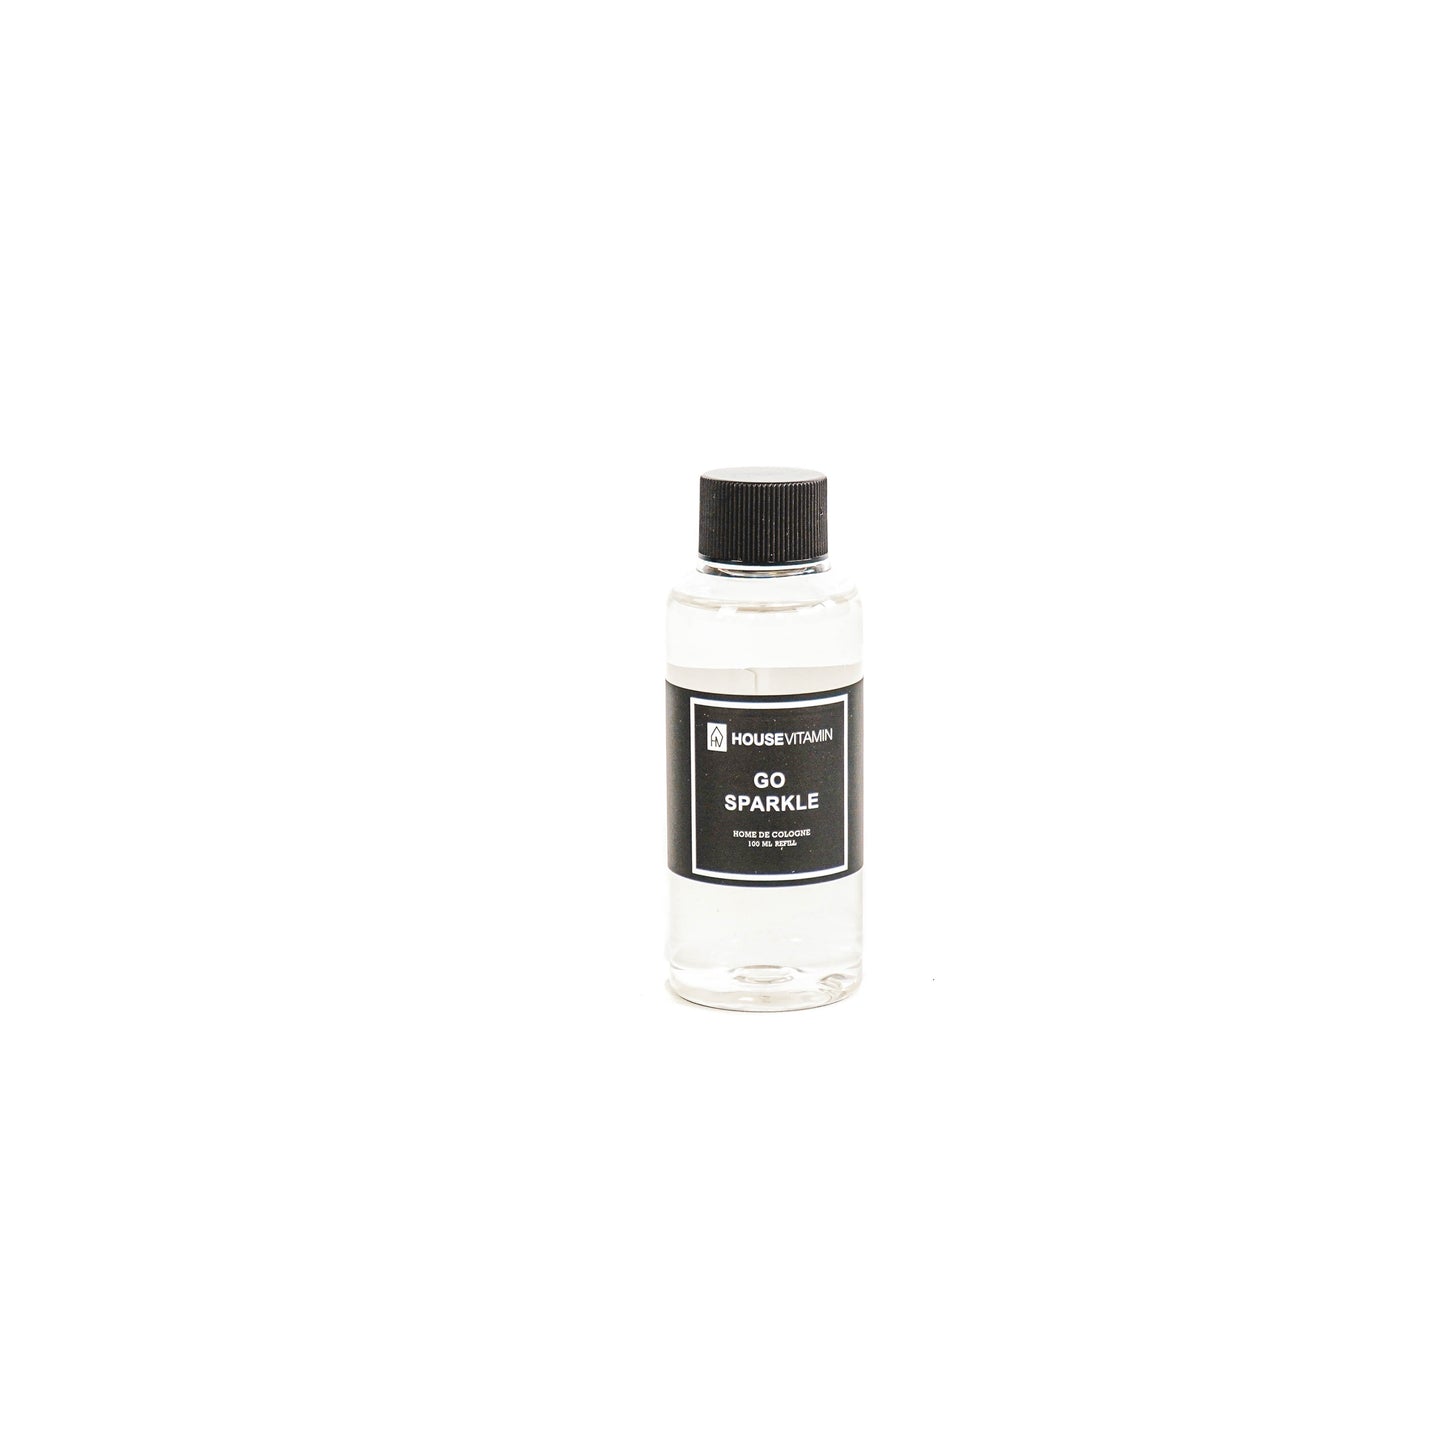 Housevitamin Home de Cologne - Refill Reed diffuser - Go Sparkle - 100 ml